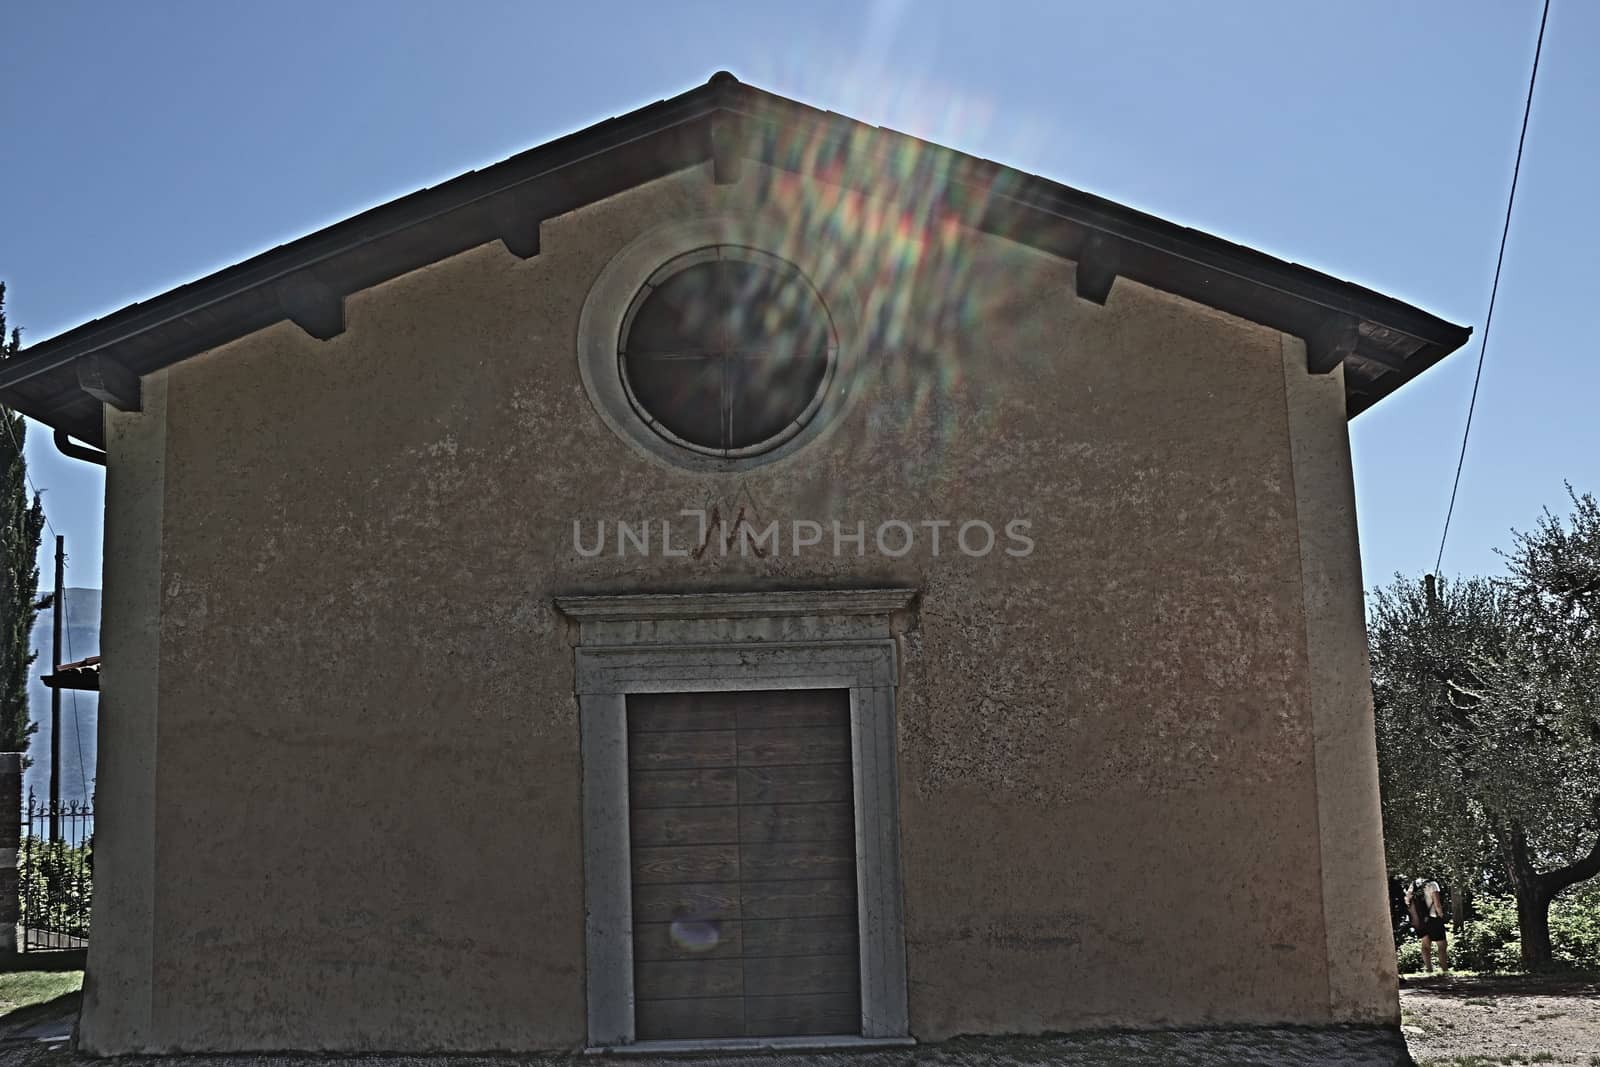 ancient sanctuary of Supina, catholic church building in Toscolano, Brescia, Italy